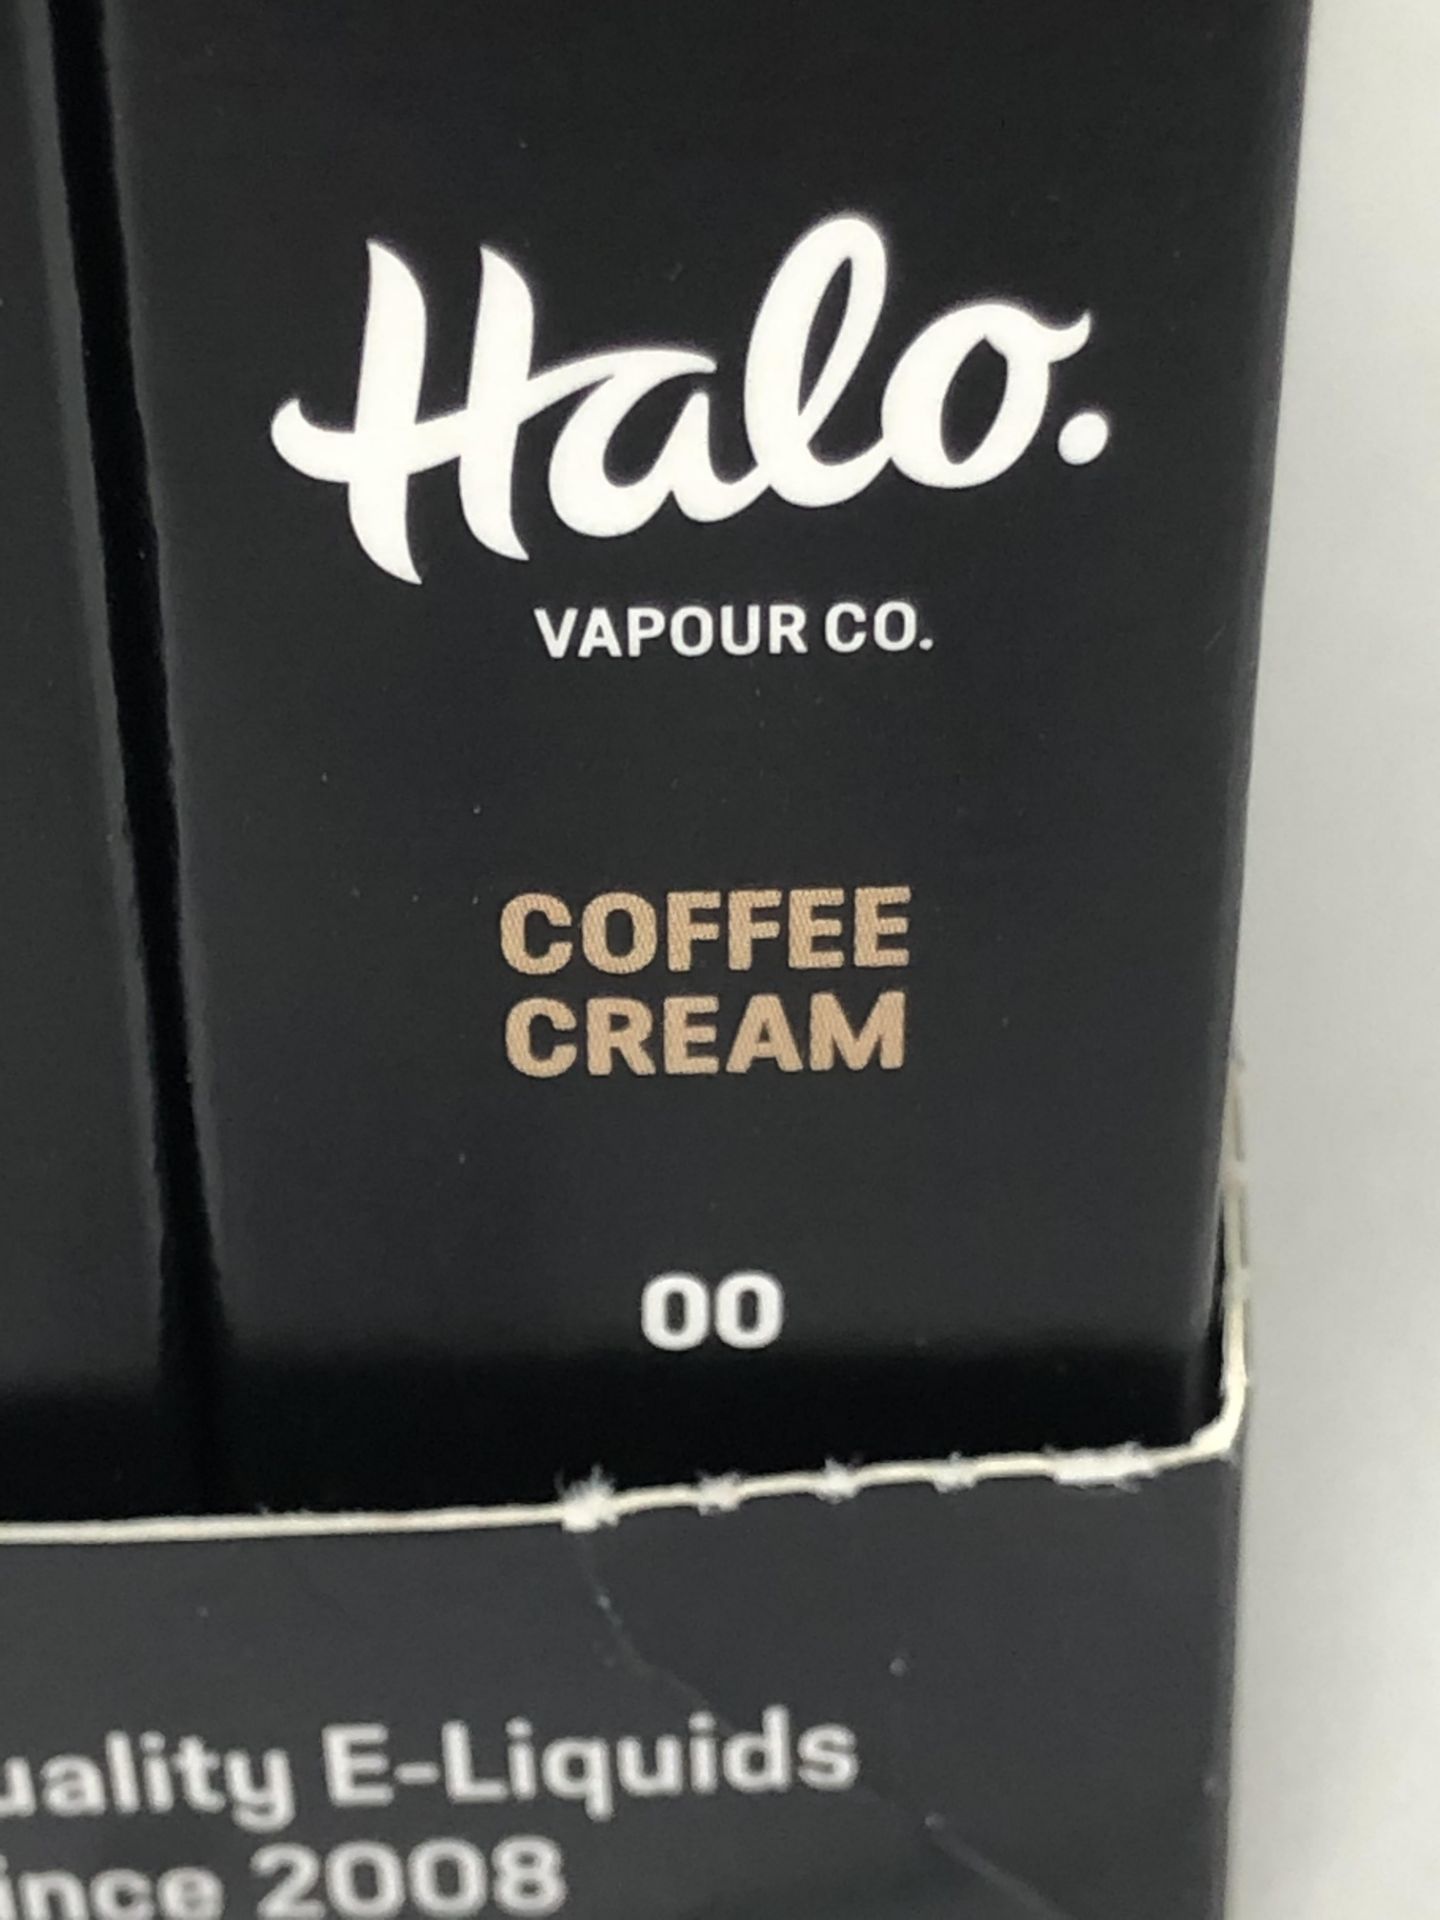 10 x Vapour co Coffee cream Halo BNIB - 10 ml - nicotine free |96136676 - Image 6 of 7